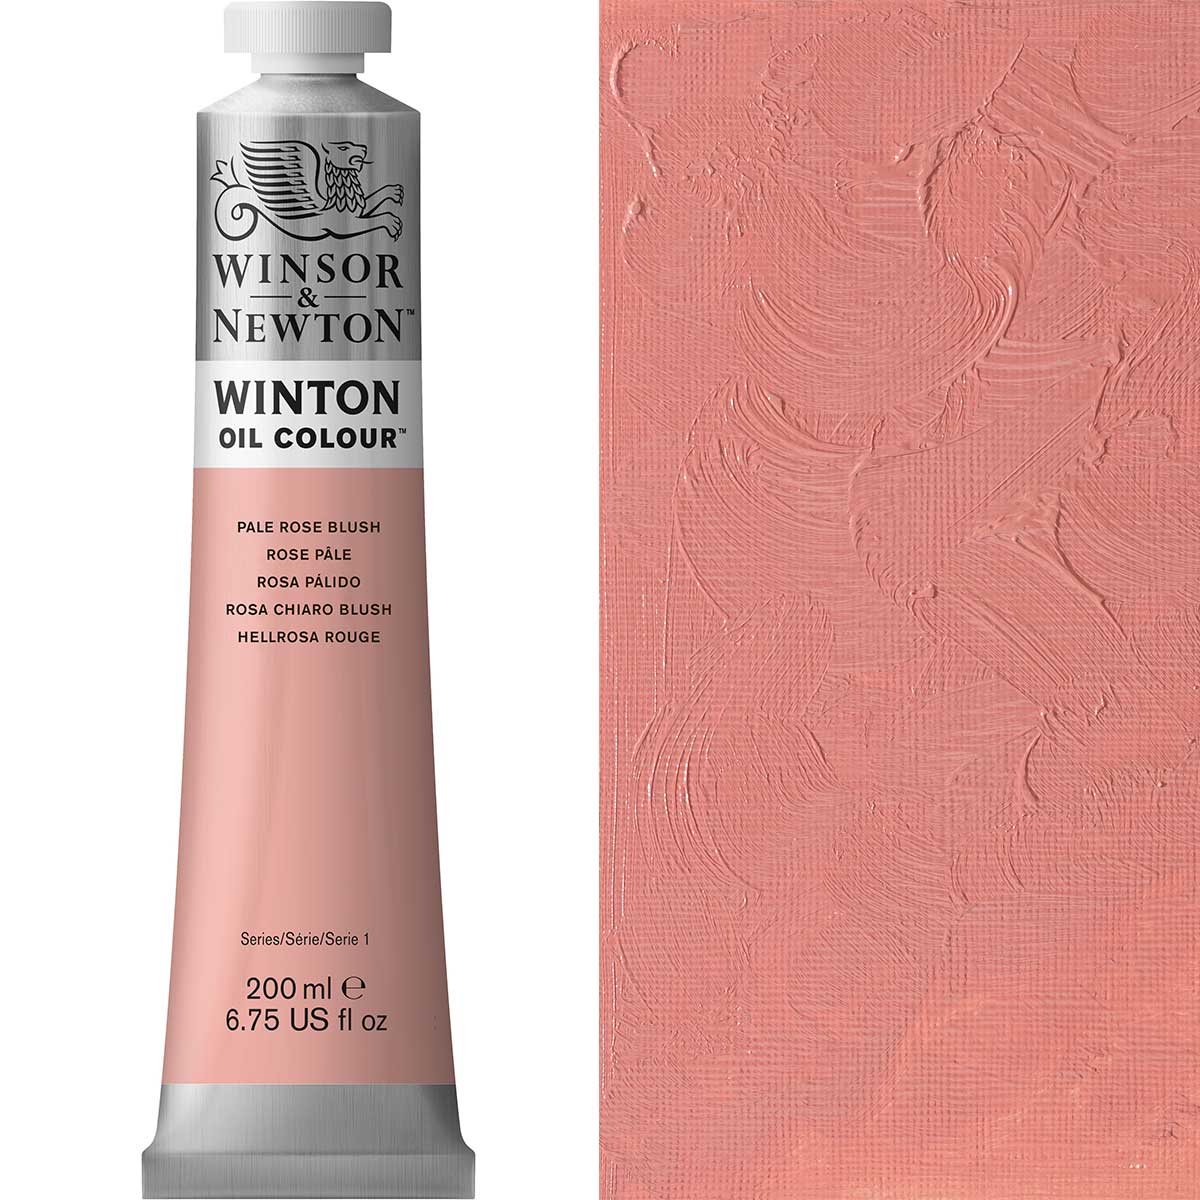 Winsor and Newton - Winton Oil Colour - 200ml - Pale Rose Blush